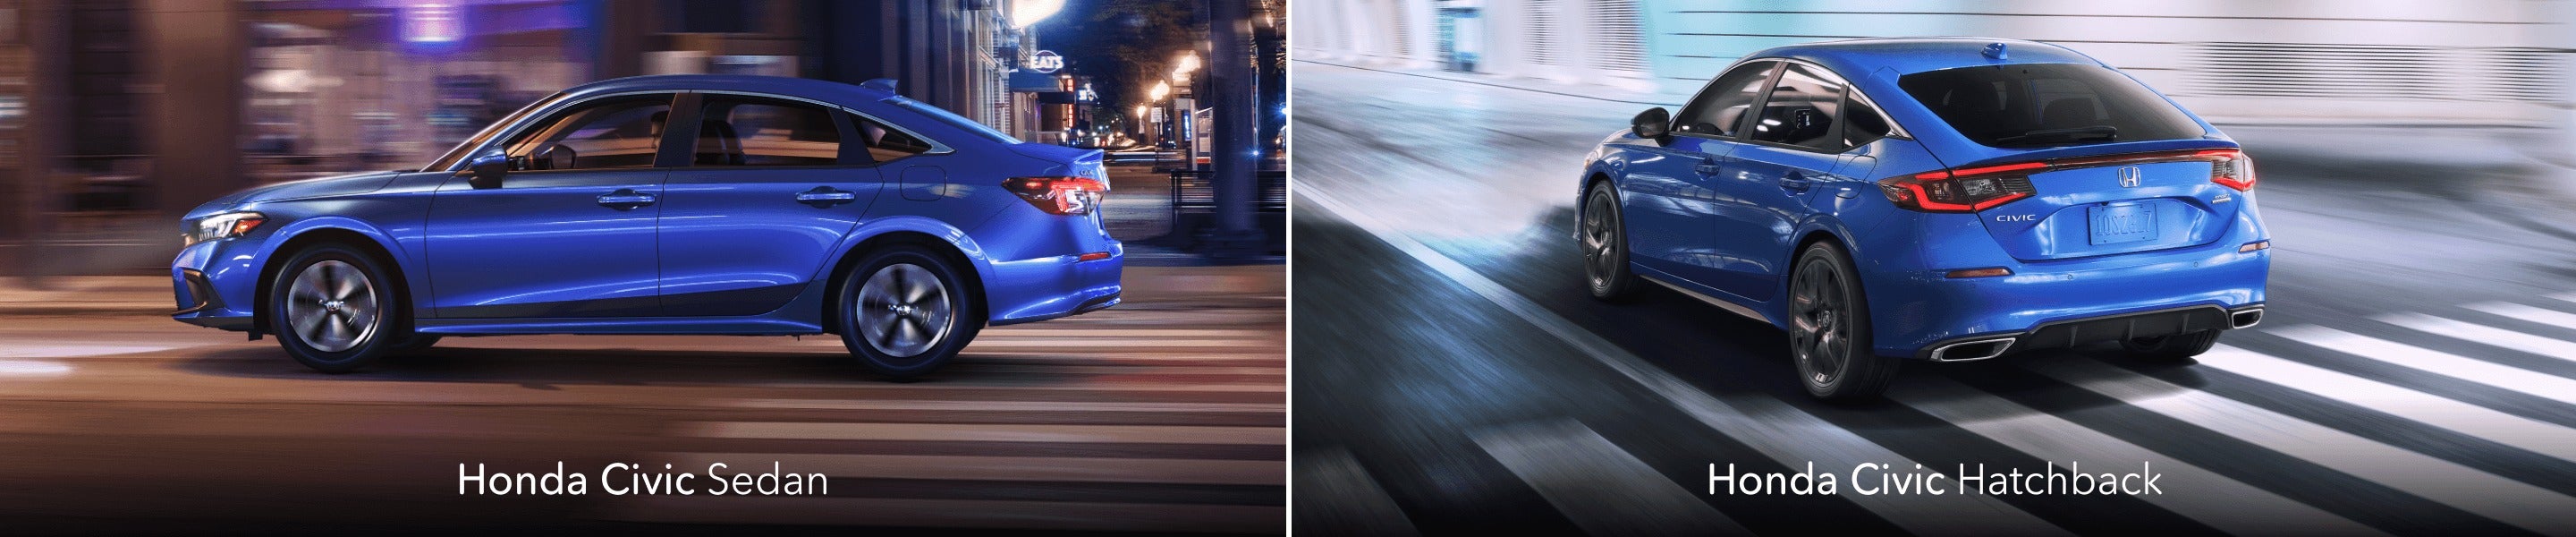 collage image of a Hondar HRV and a Honda CRV